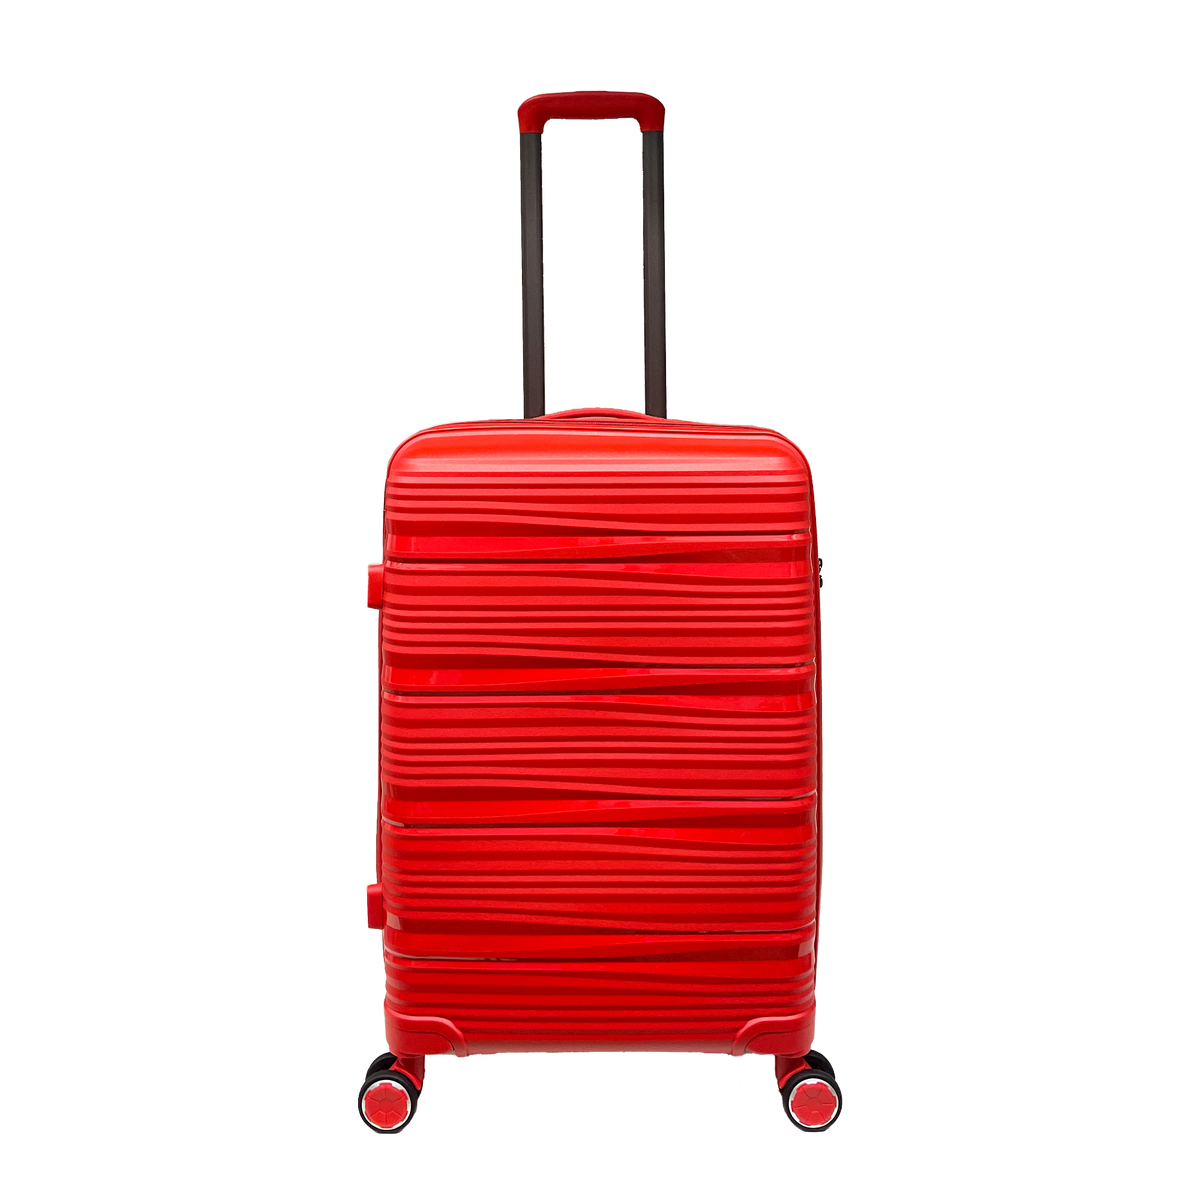 Average polypropylene suitcase resistance to integrated tsa padlock